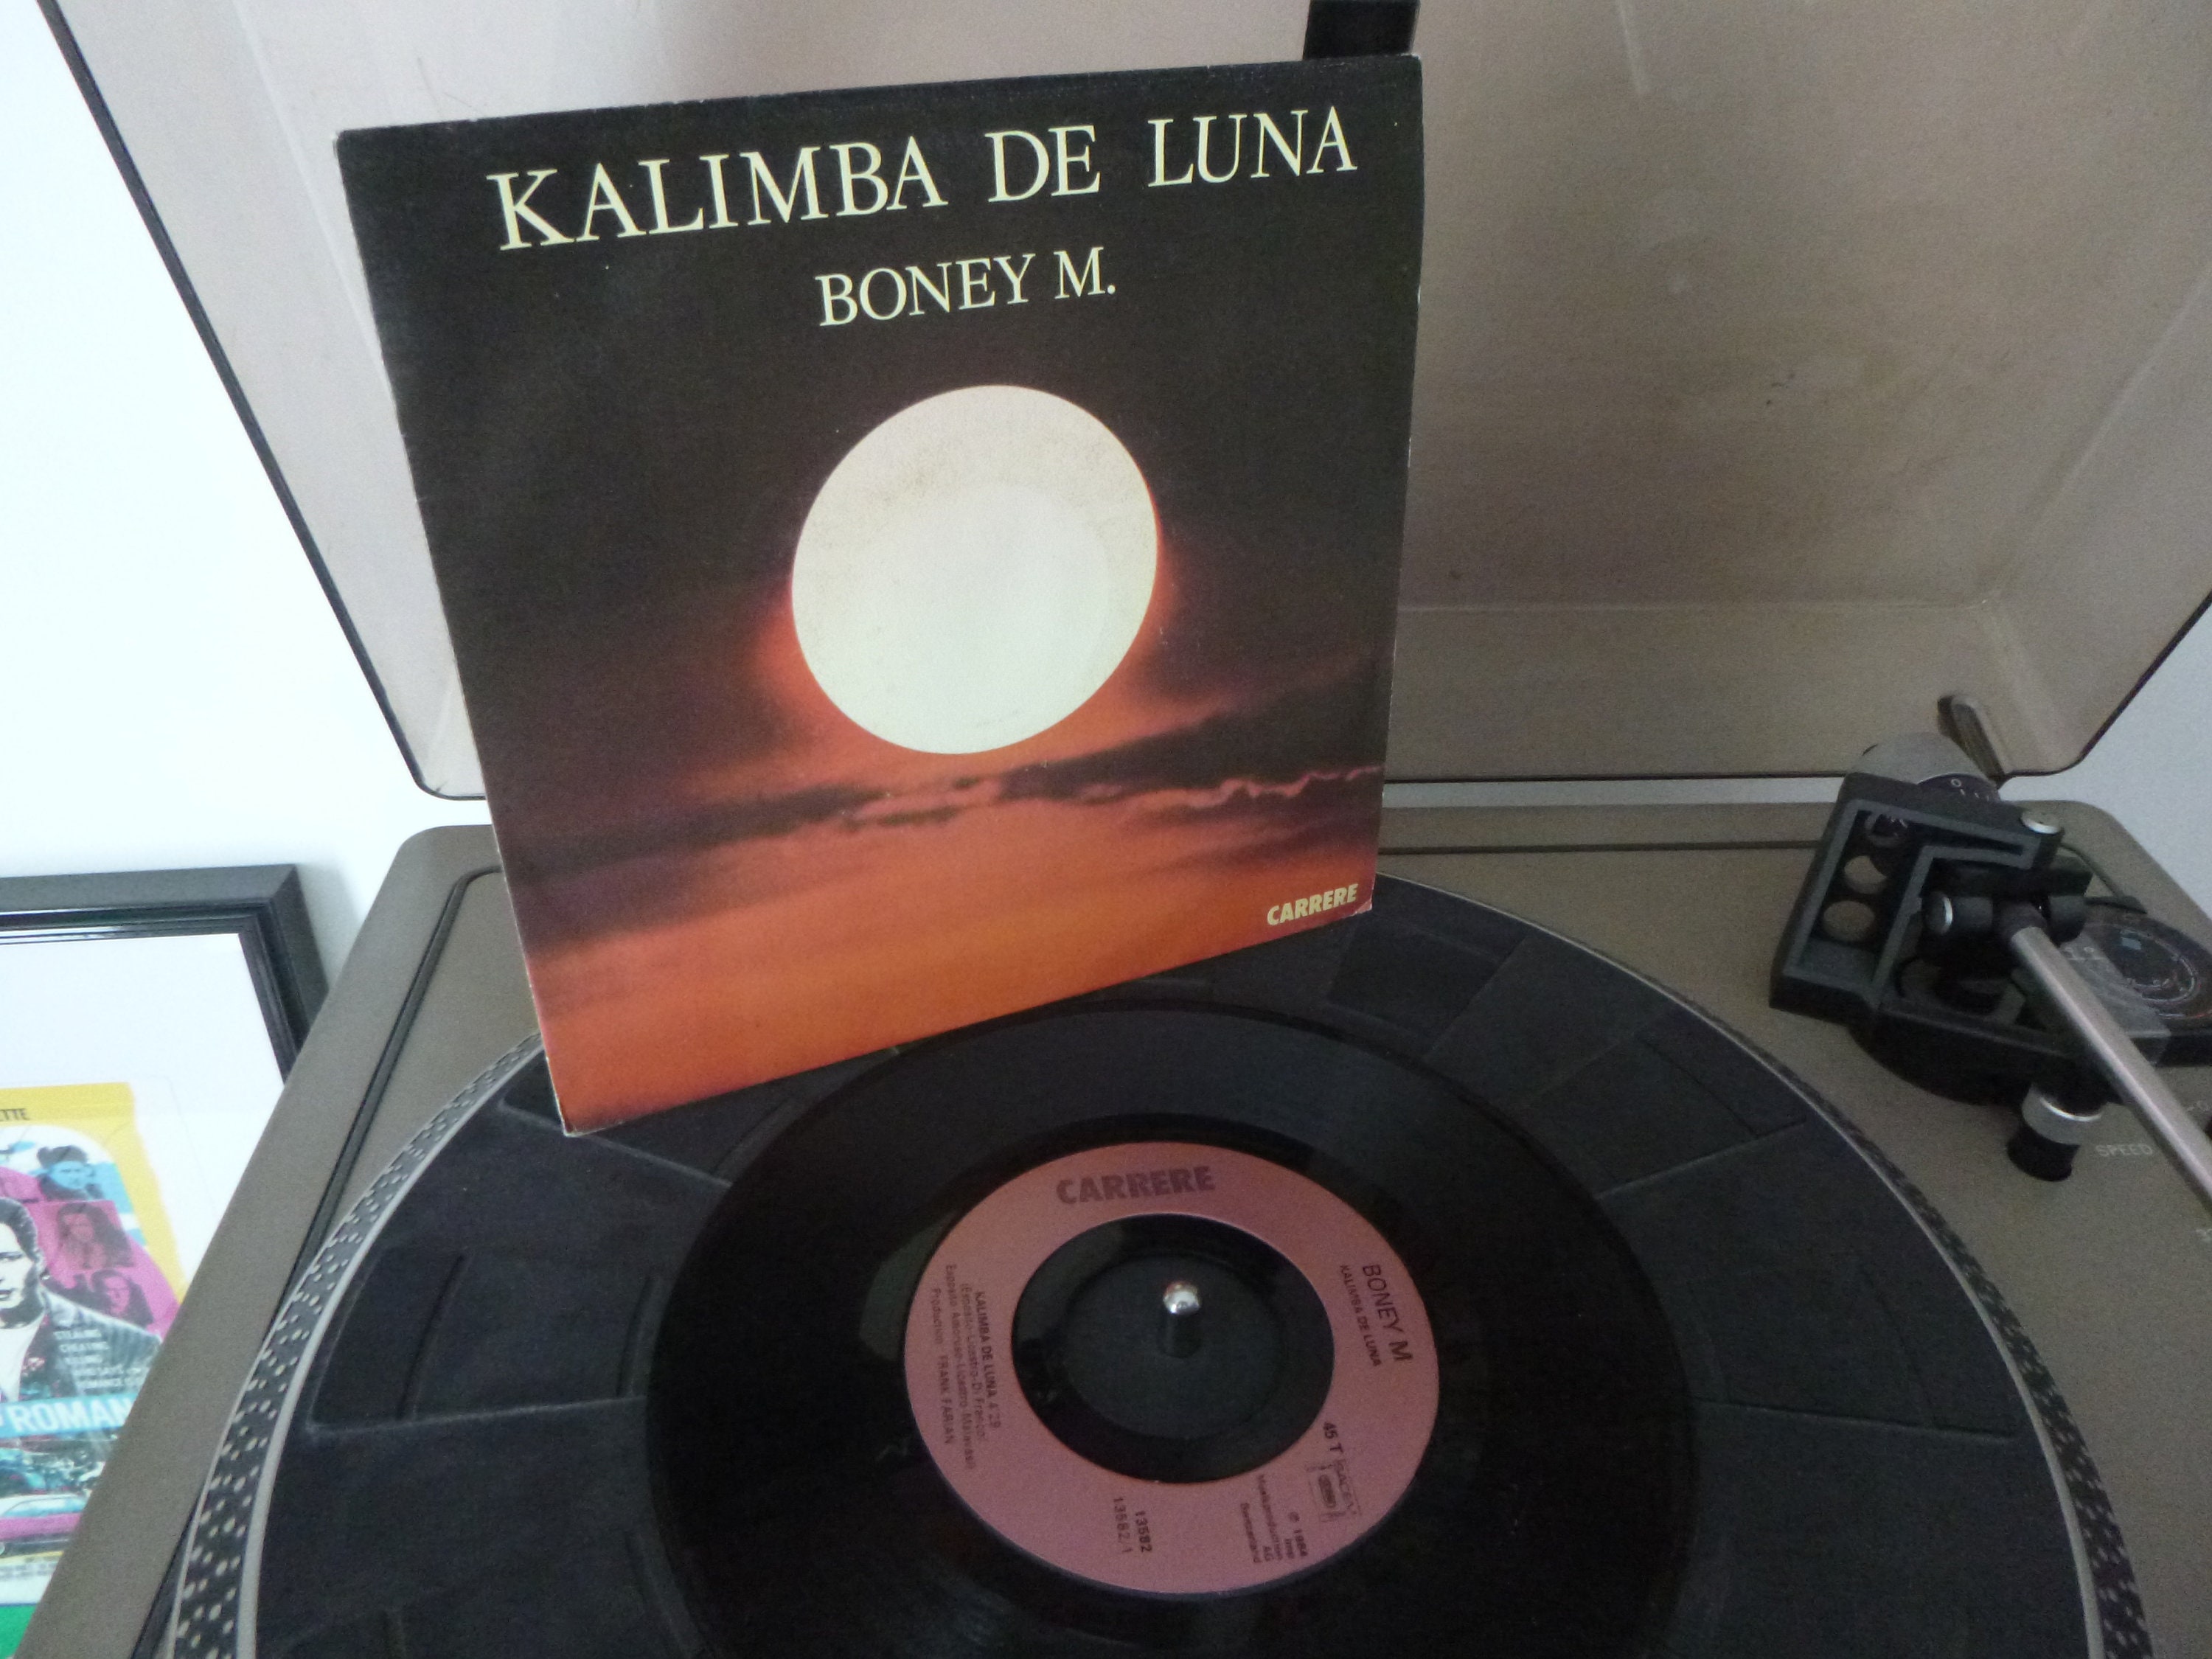 Boney m "Kalimba de Luna".